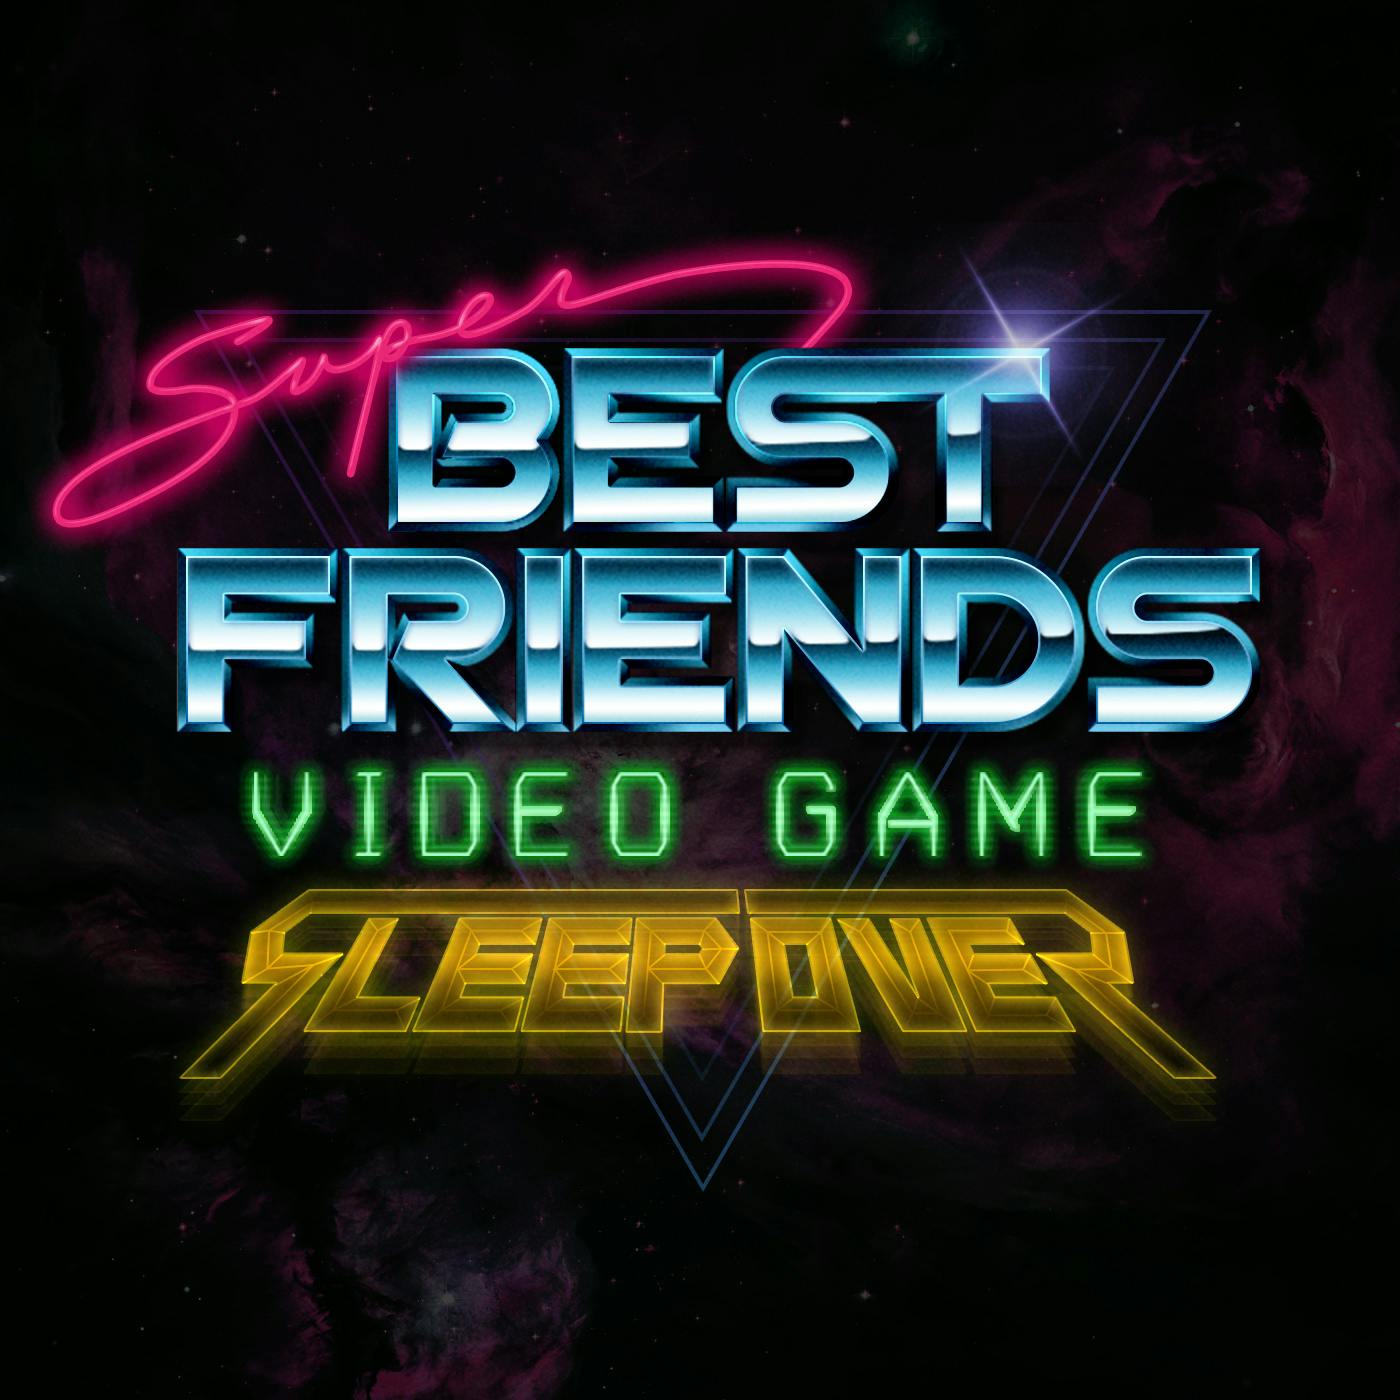 Super Best Friends Video Game Sleepover - Episode 44